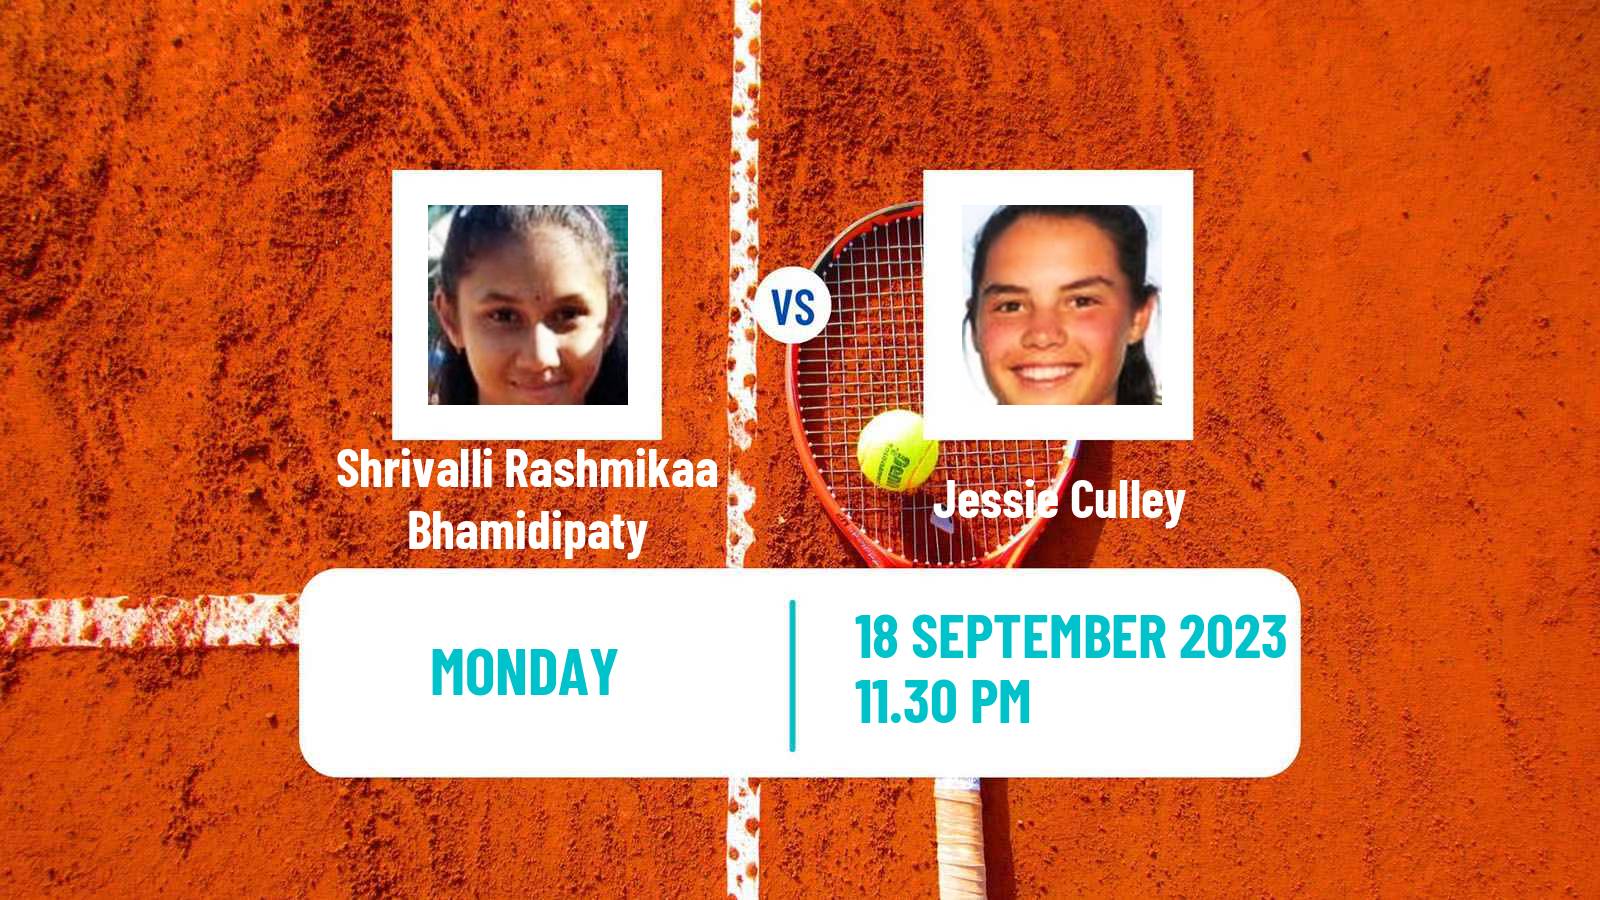 Tennis ITF W25 Perth 2 Women 2023 Shrivalli Rashmikaa Bhamidipaty - Jessie Culley